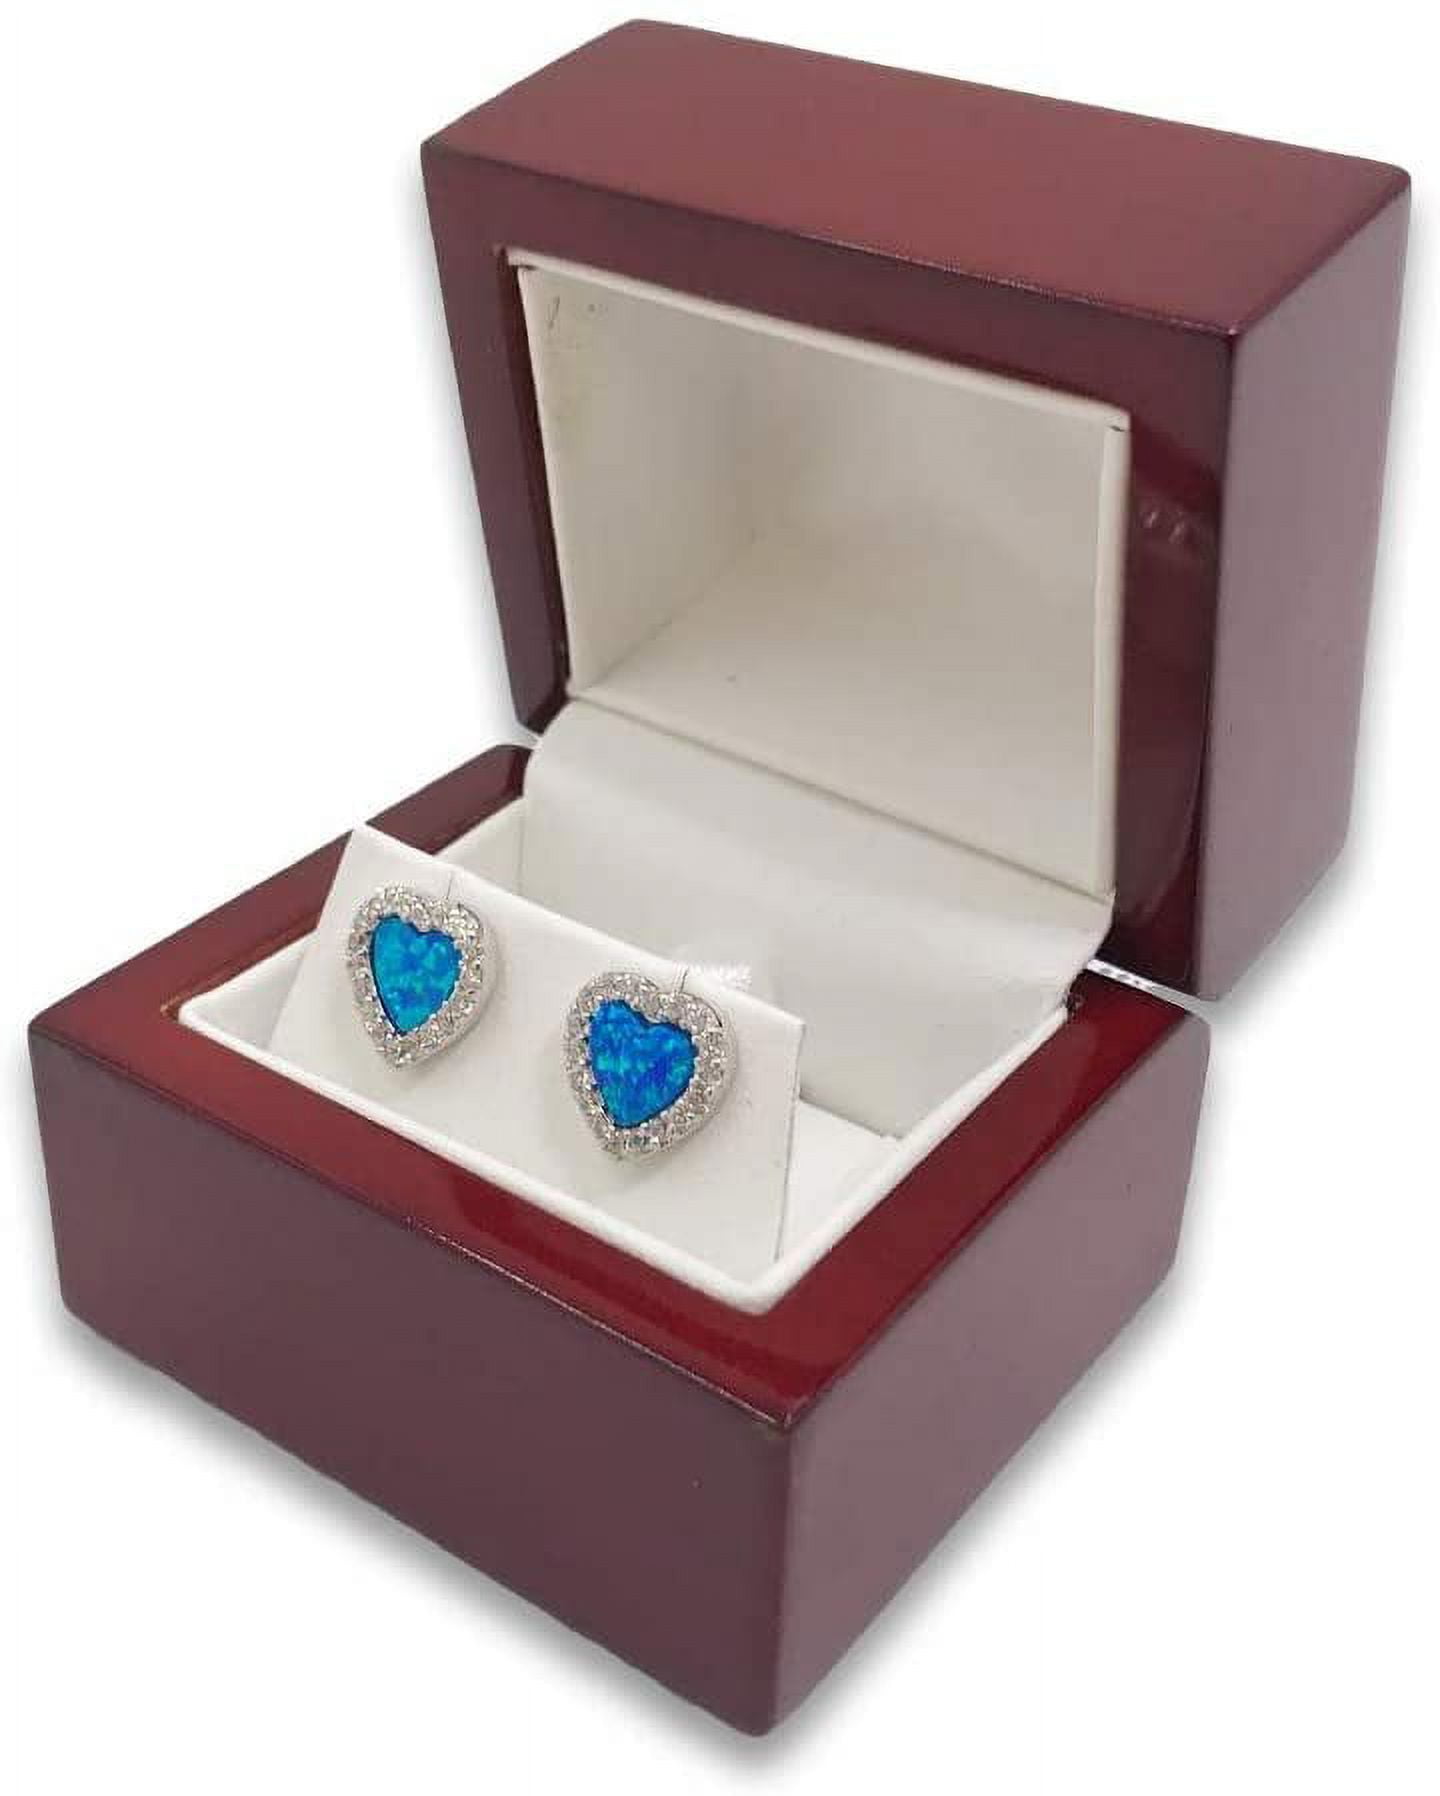 NICEXMAS 24Pcs Elegant Jewelry Boxes Jewelry Gift Boxes Ring